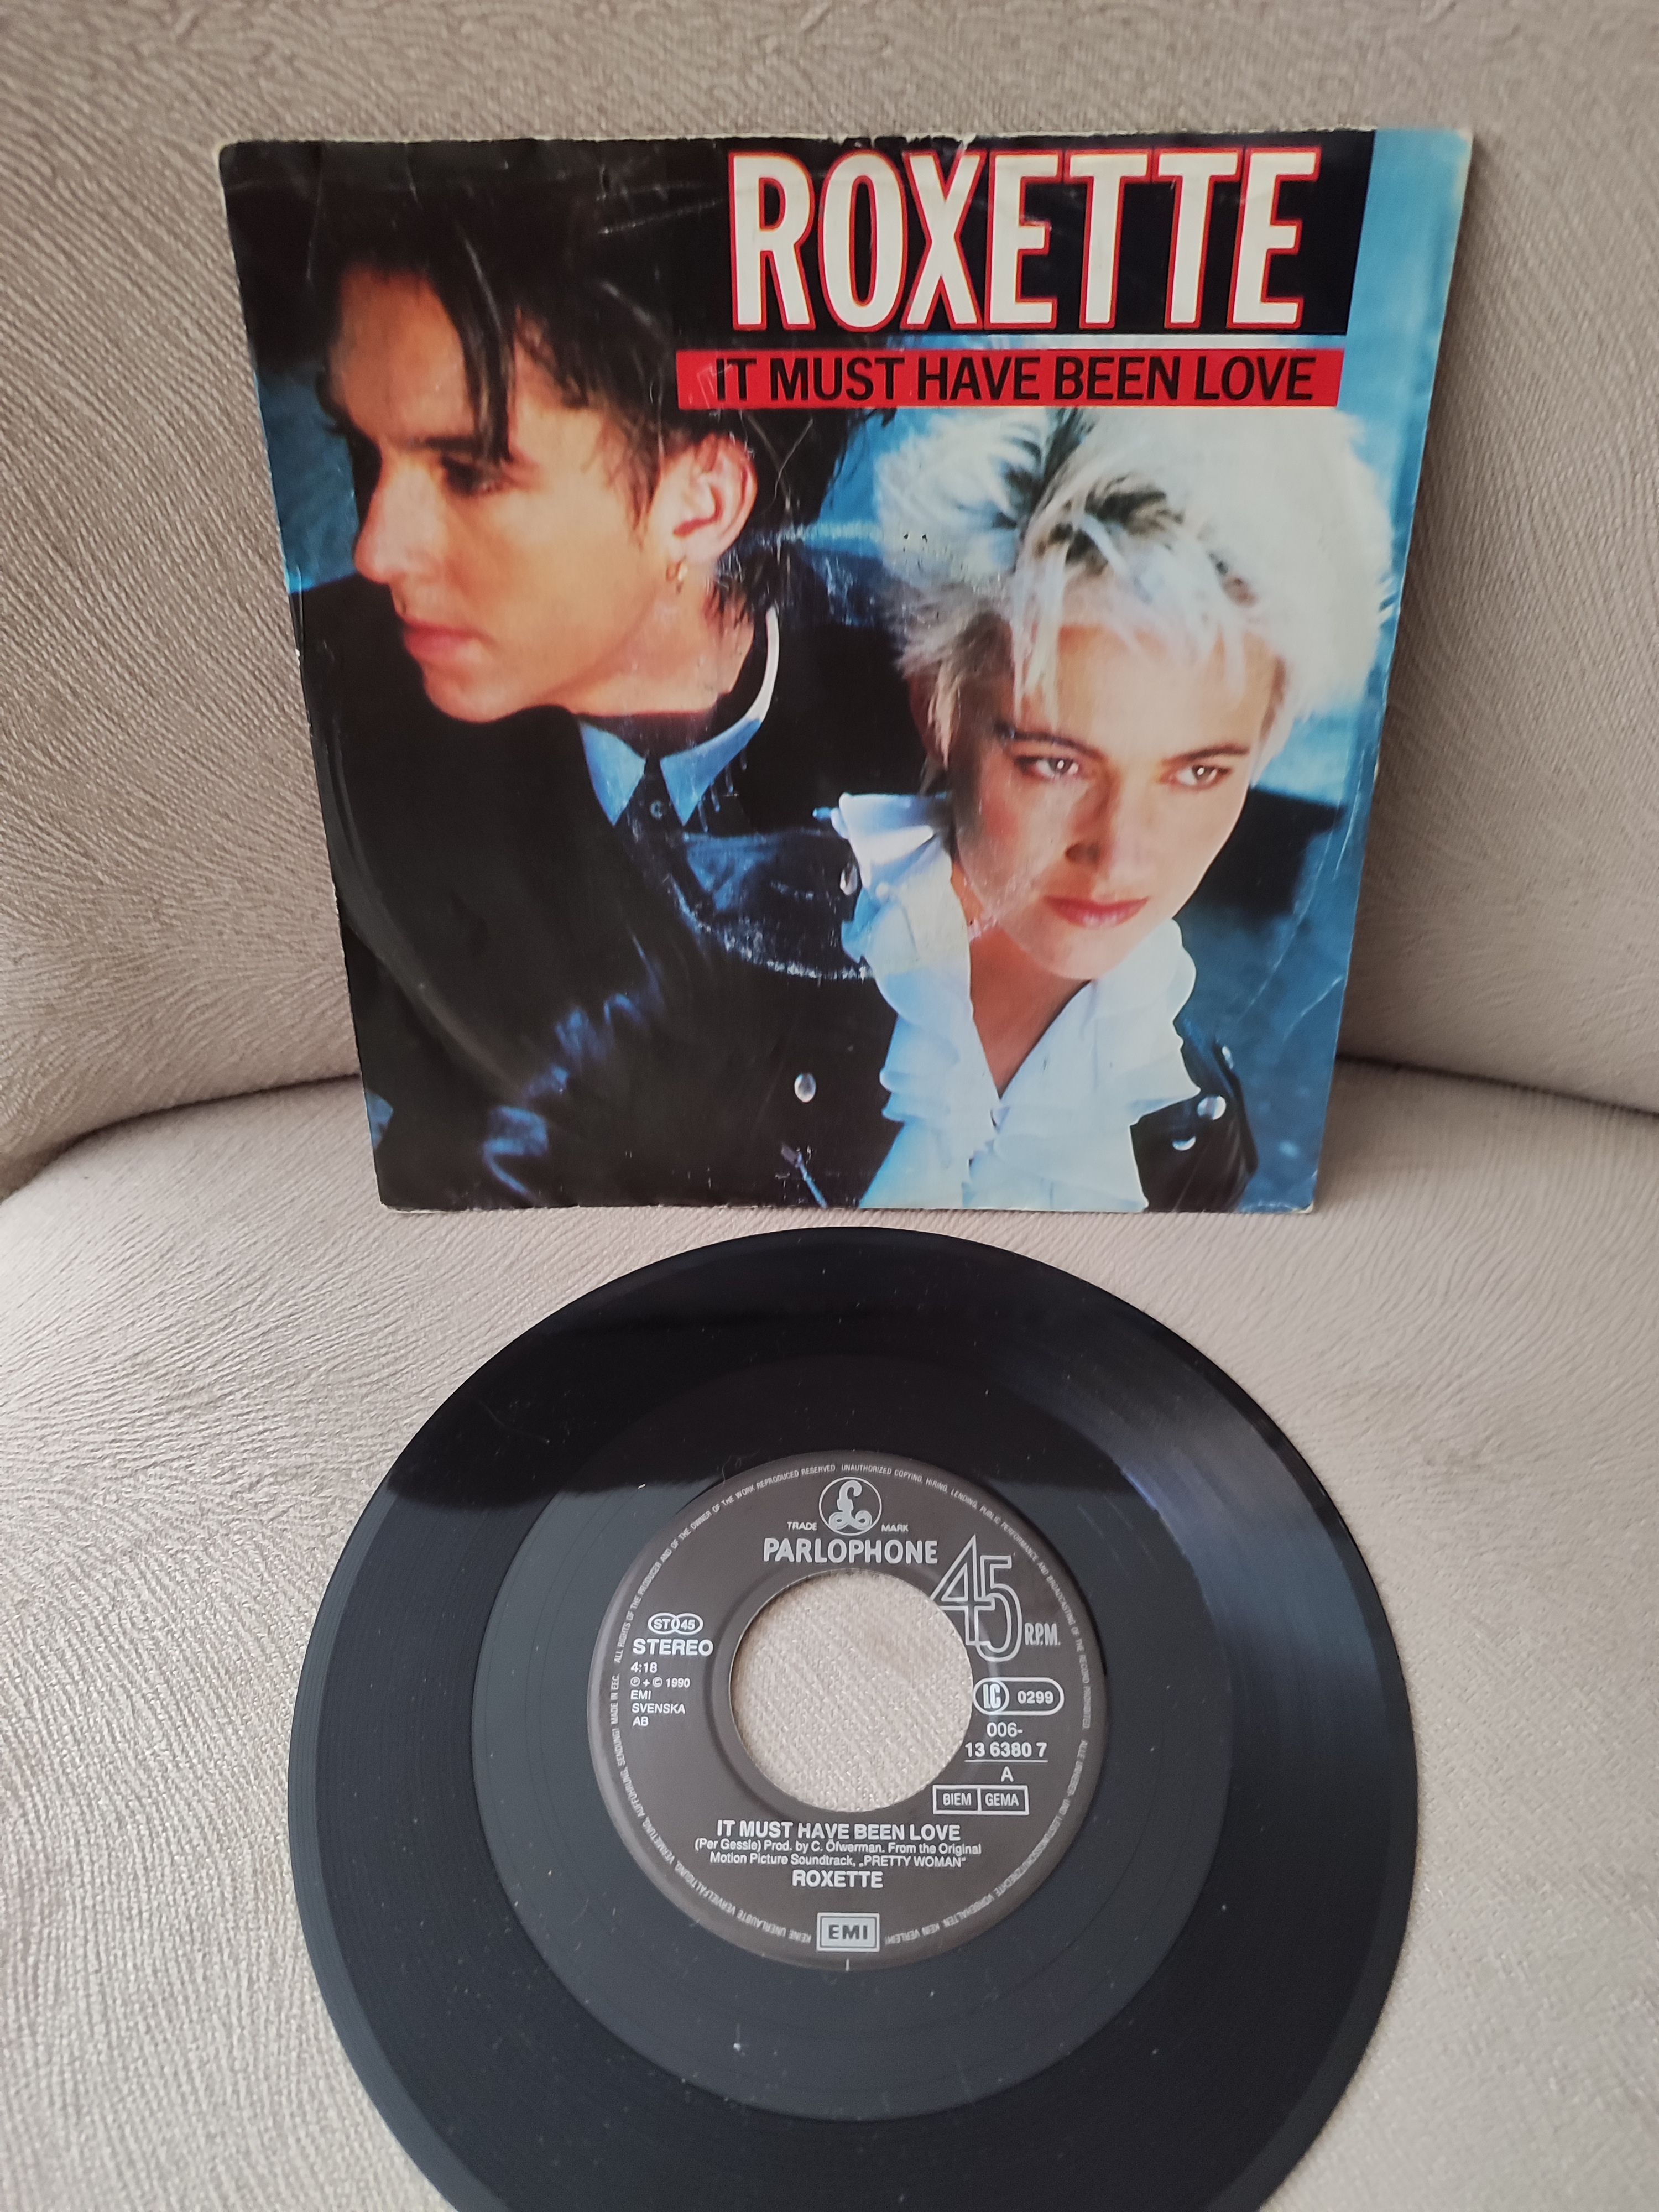 ROXETTE - It Must Have Been Love -1990 Almanya Basım 45lik Plak 2. el